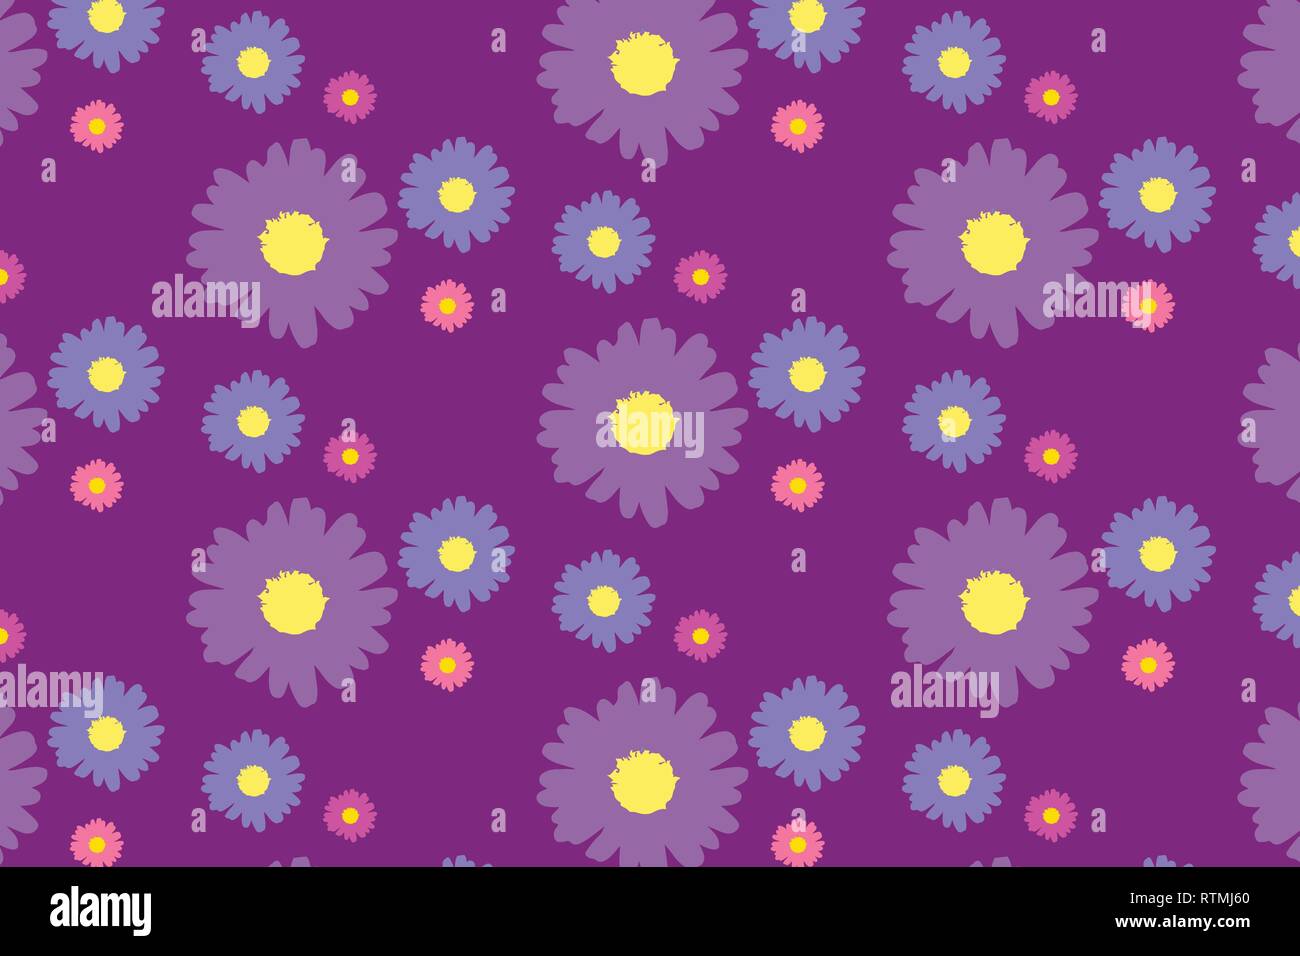 Florales Muster-Vector Illustration - Blumen - Hintergrund - Editierbare Layer Abbildung Stock Vektor